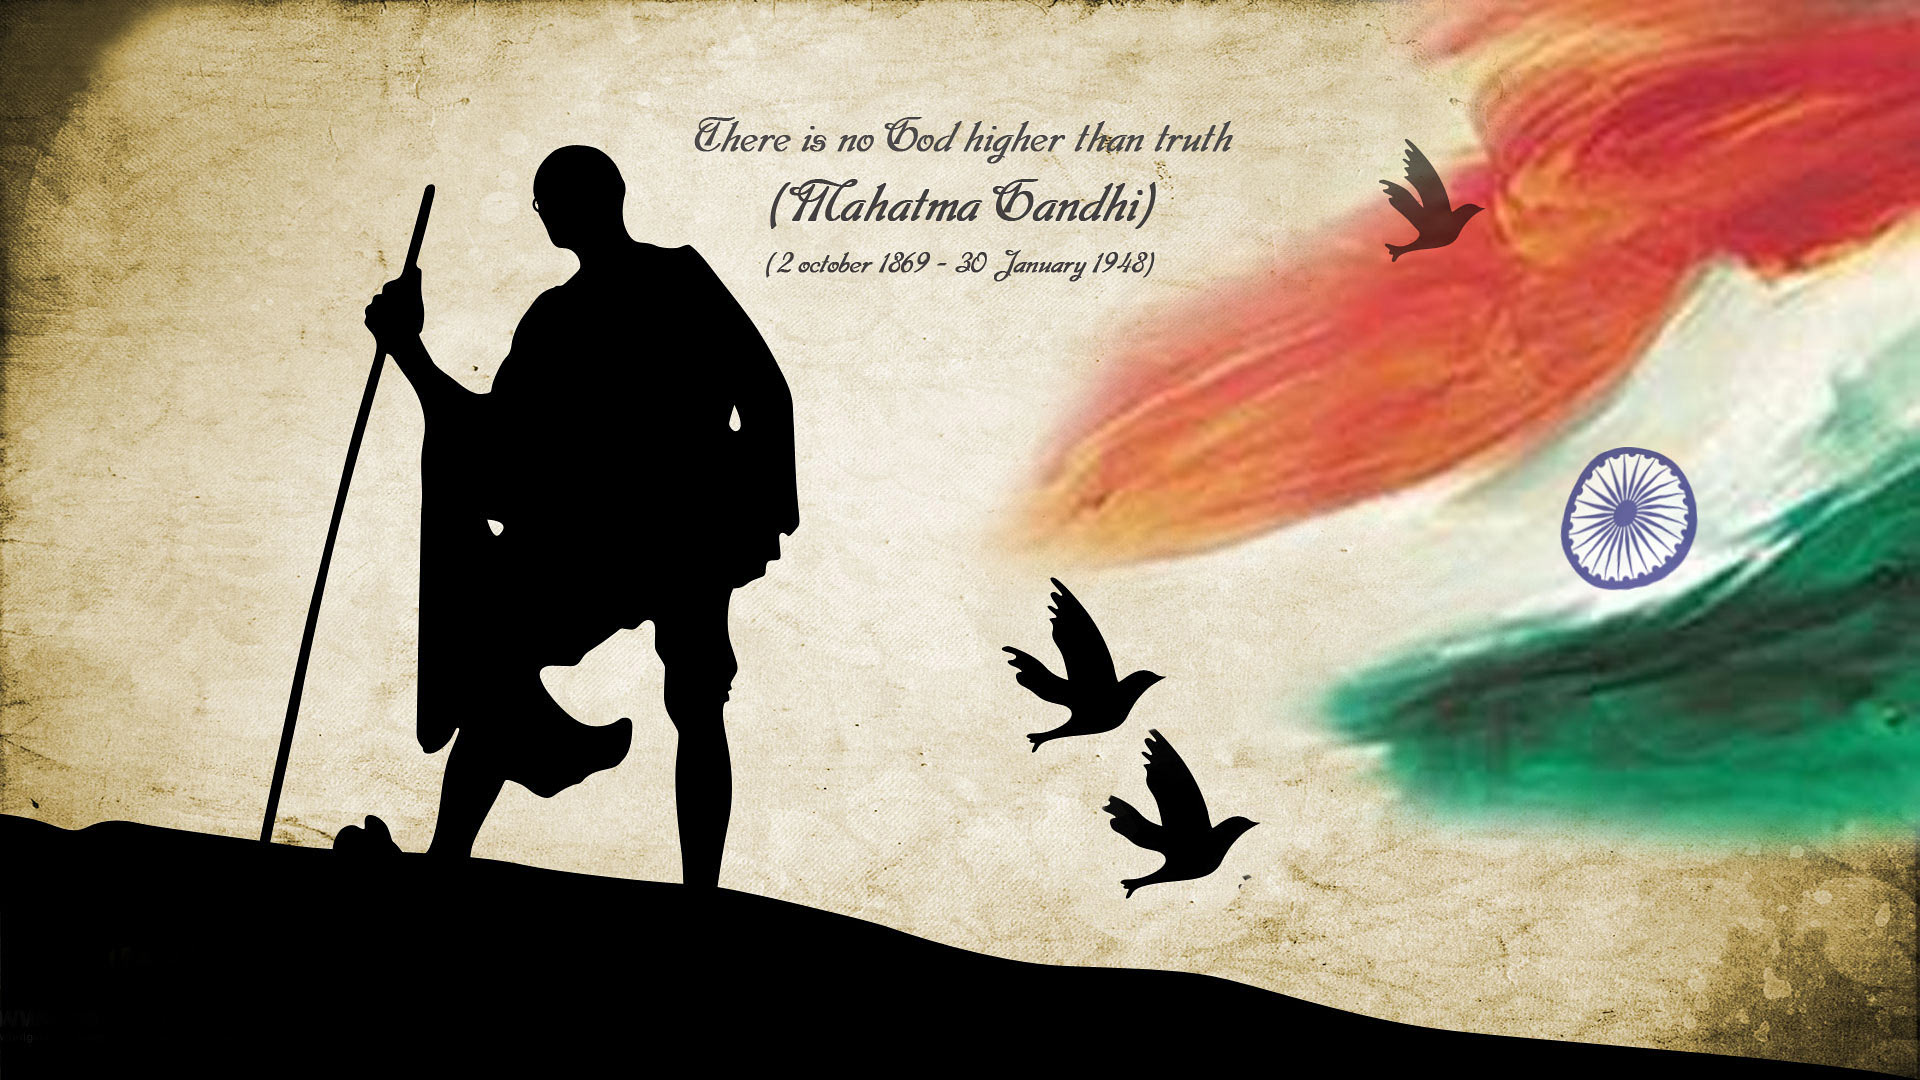 Mahatma Gandhi Wallpapers 1024x768, 1280x960, 1600x1200